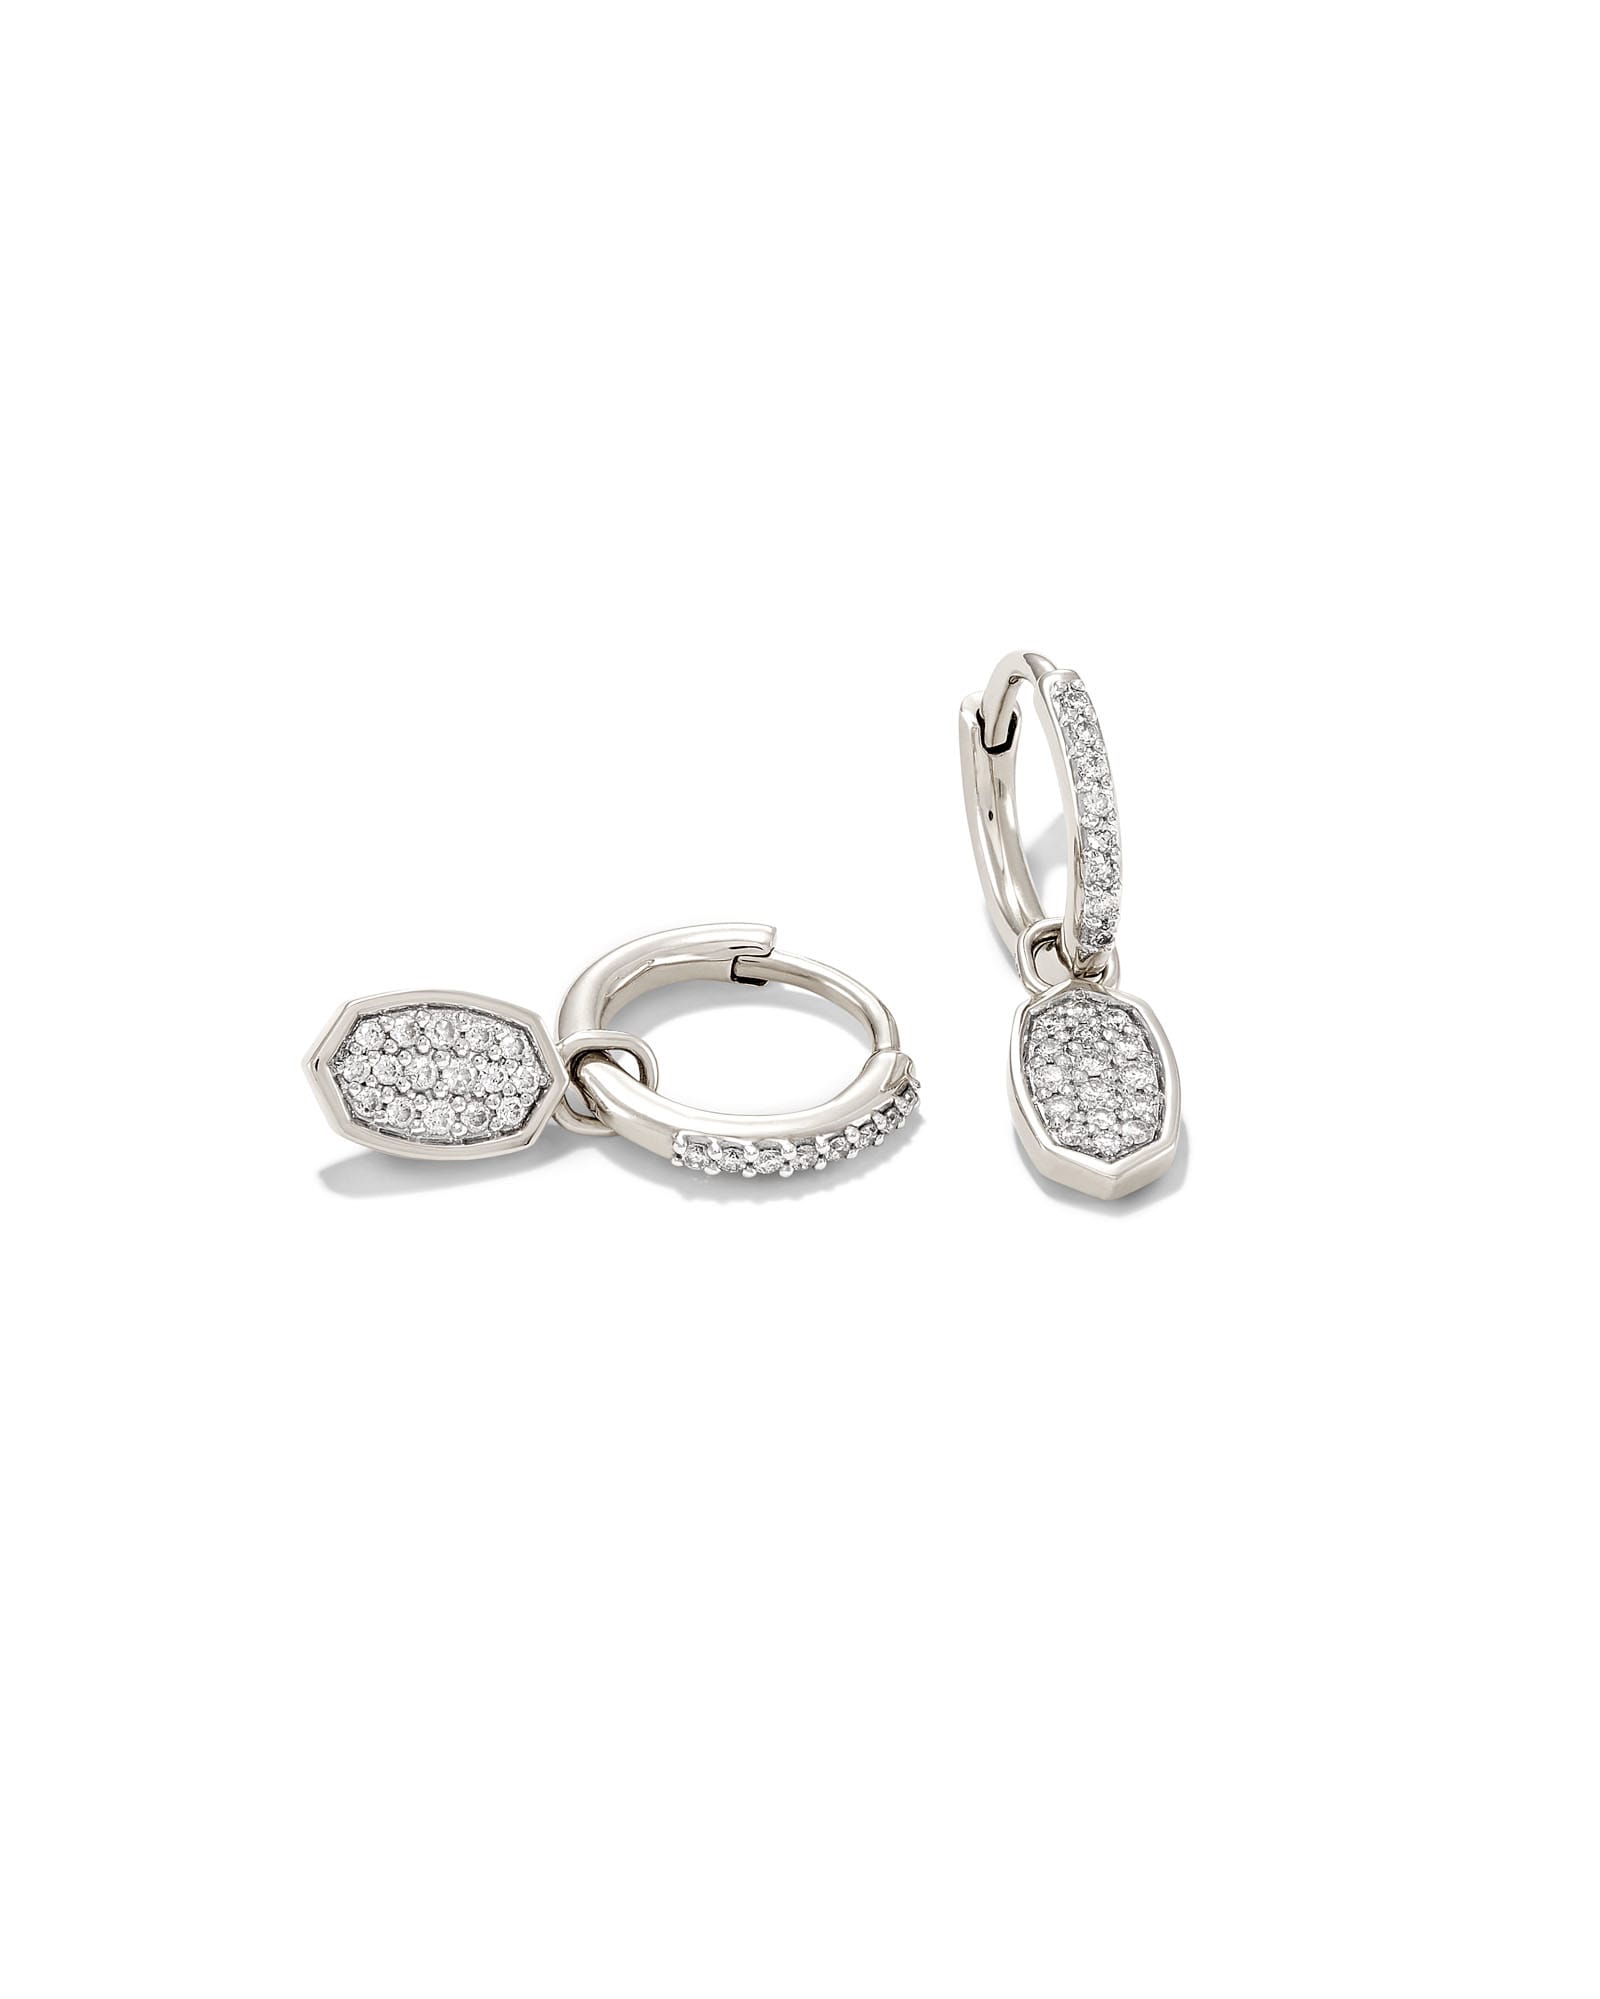 Marisa 14k White Gold Huggie Earrings in White Diamond image number 0.0